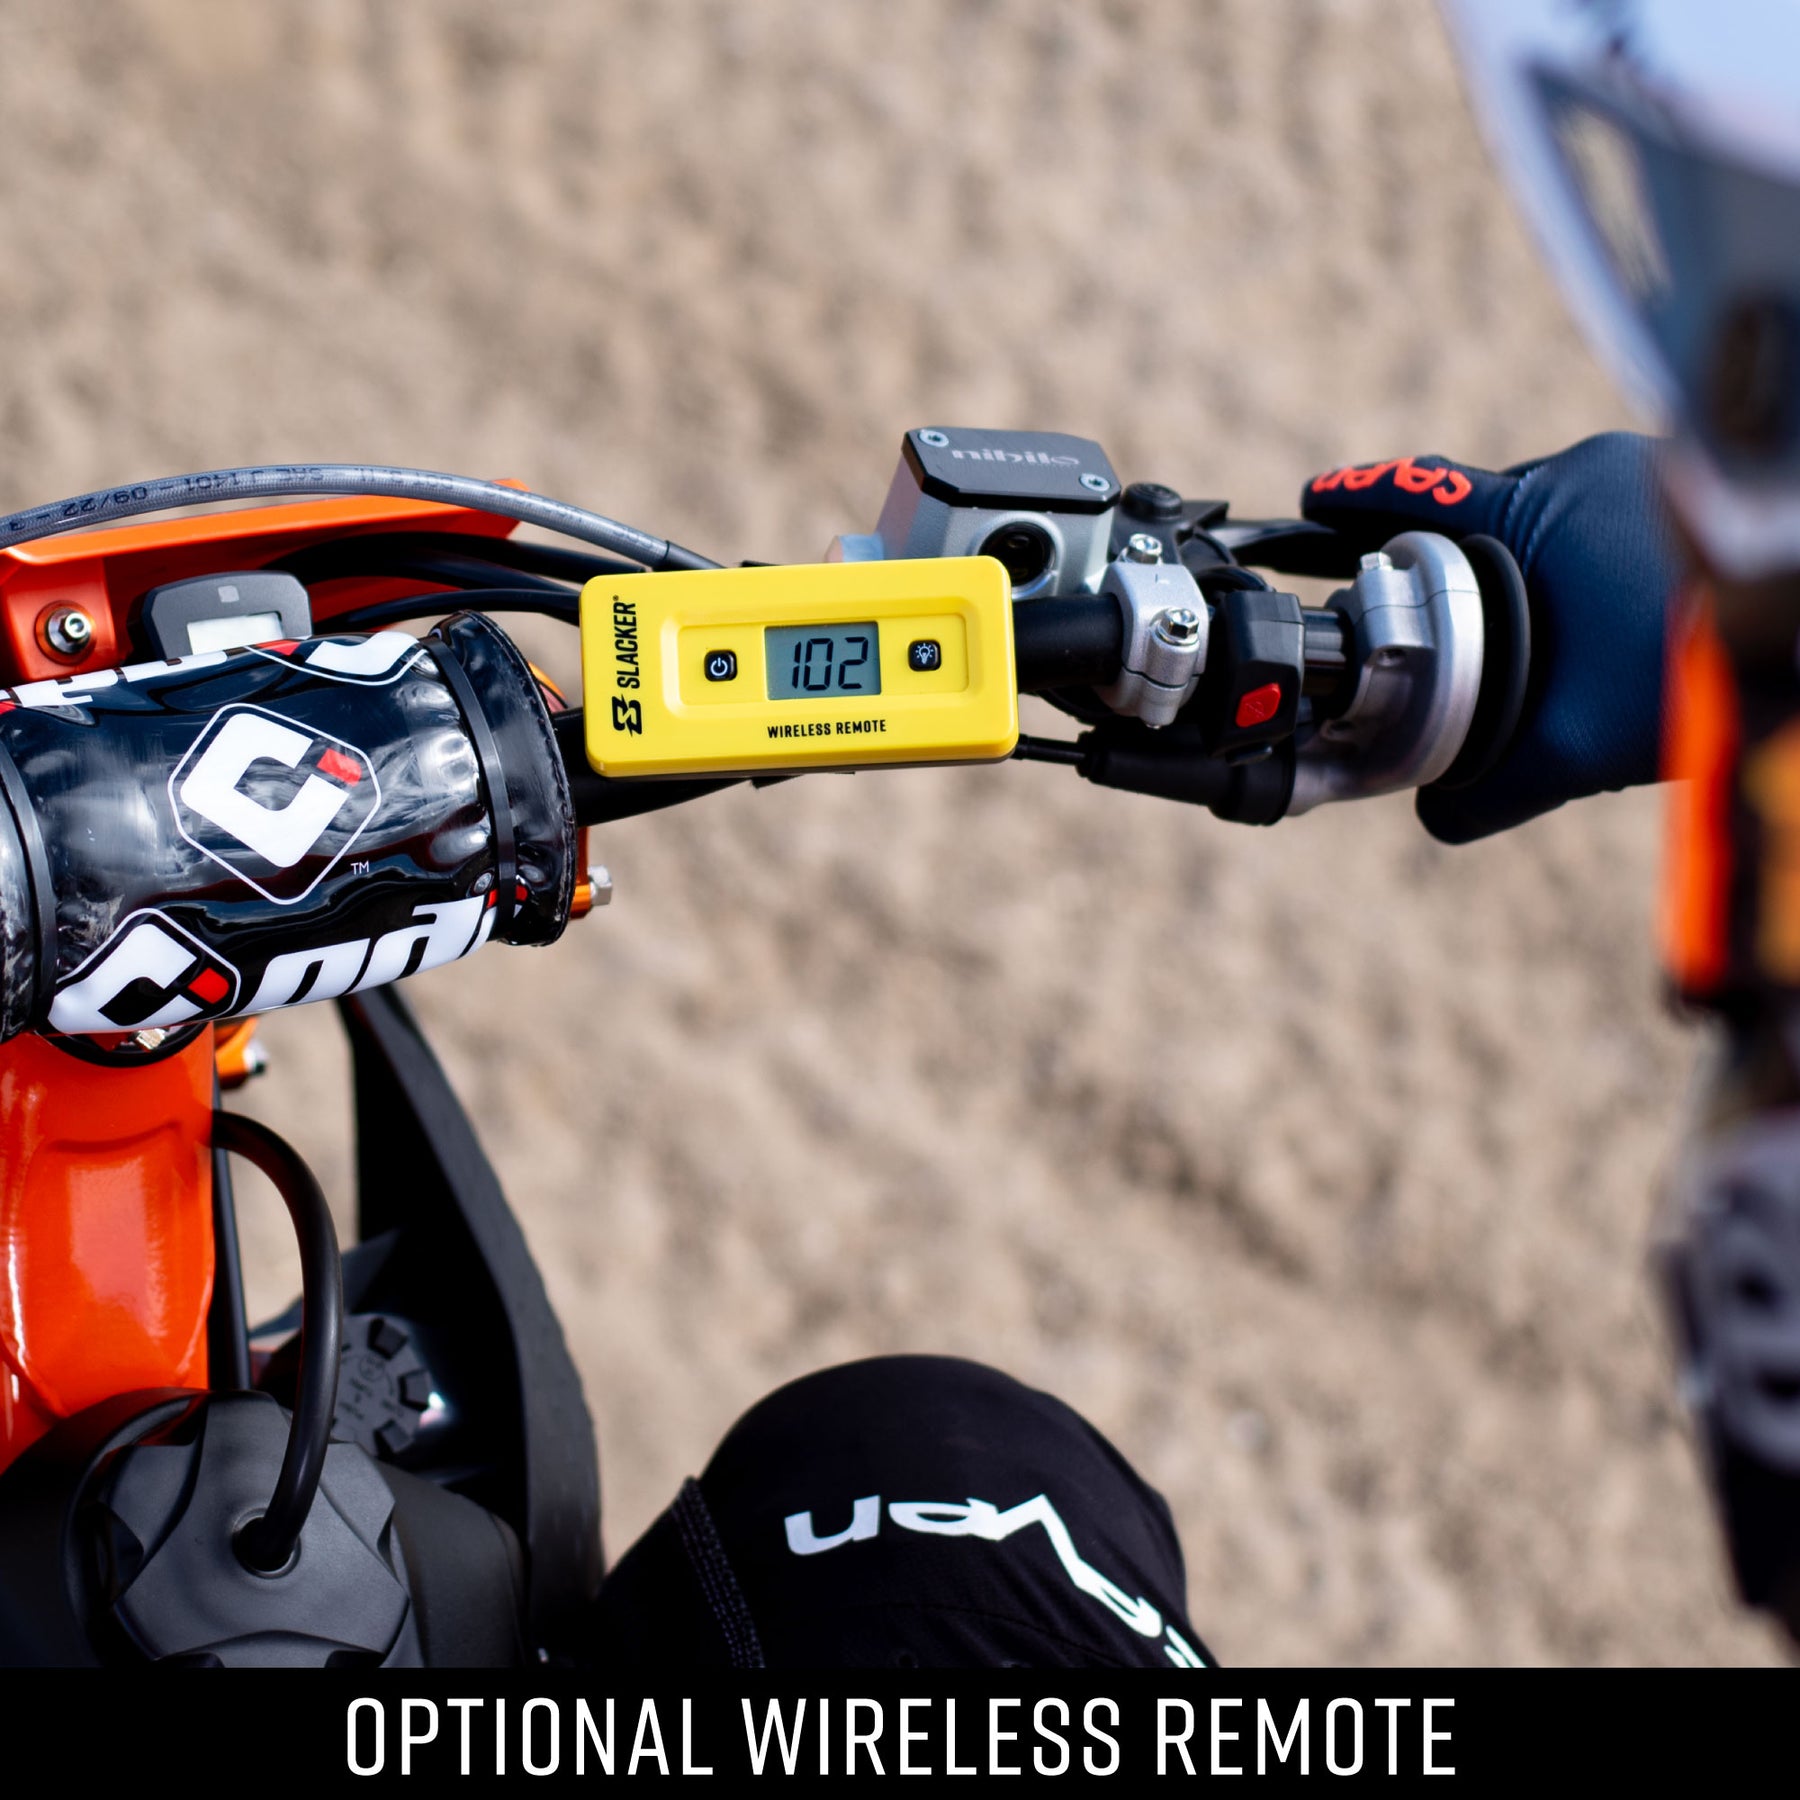 The Slacker digital suspension tuner optional wireless remote display.